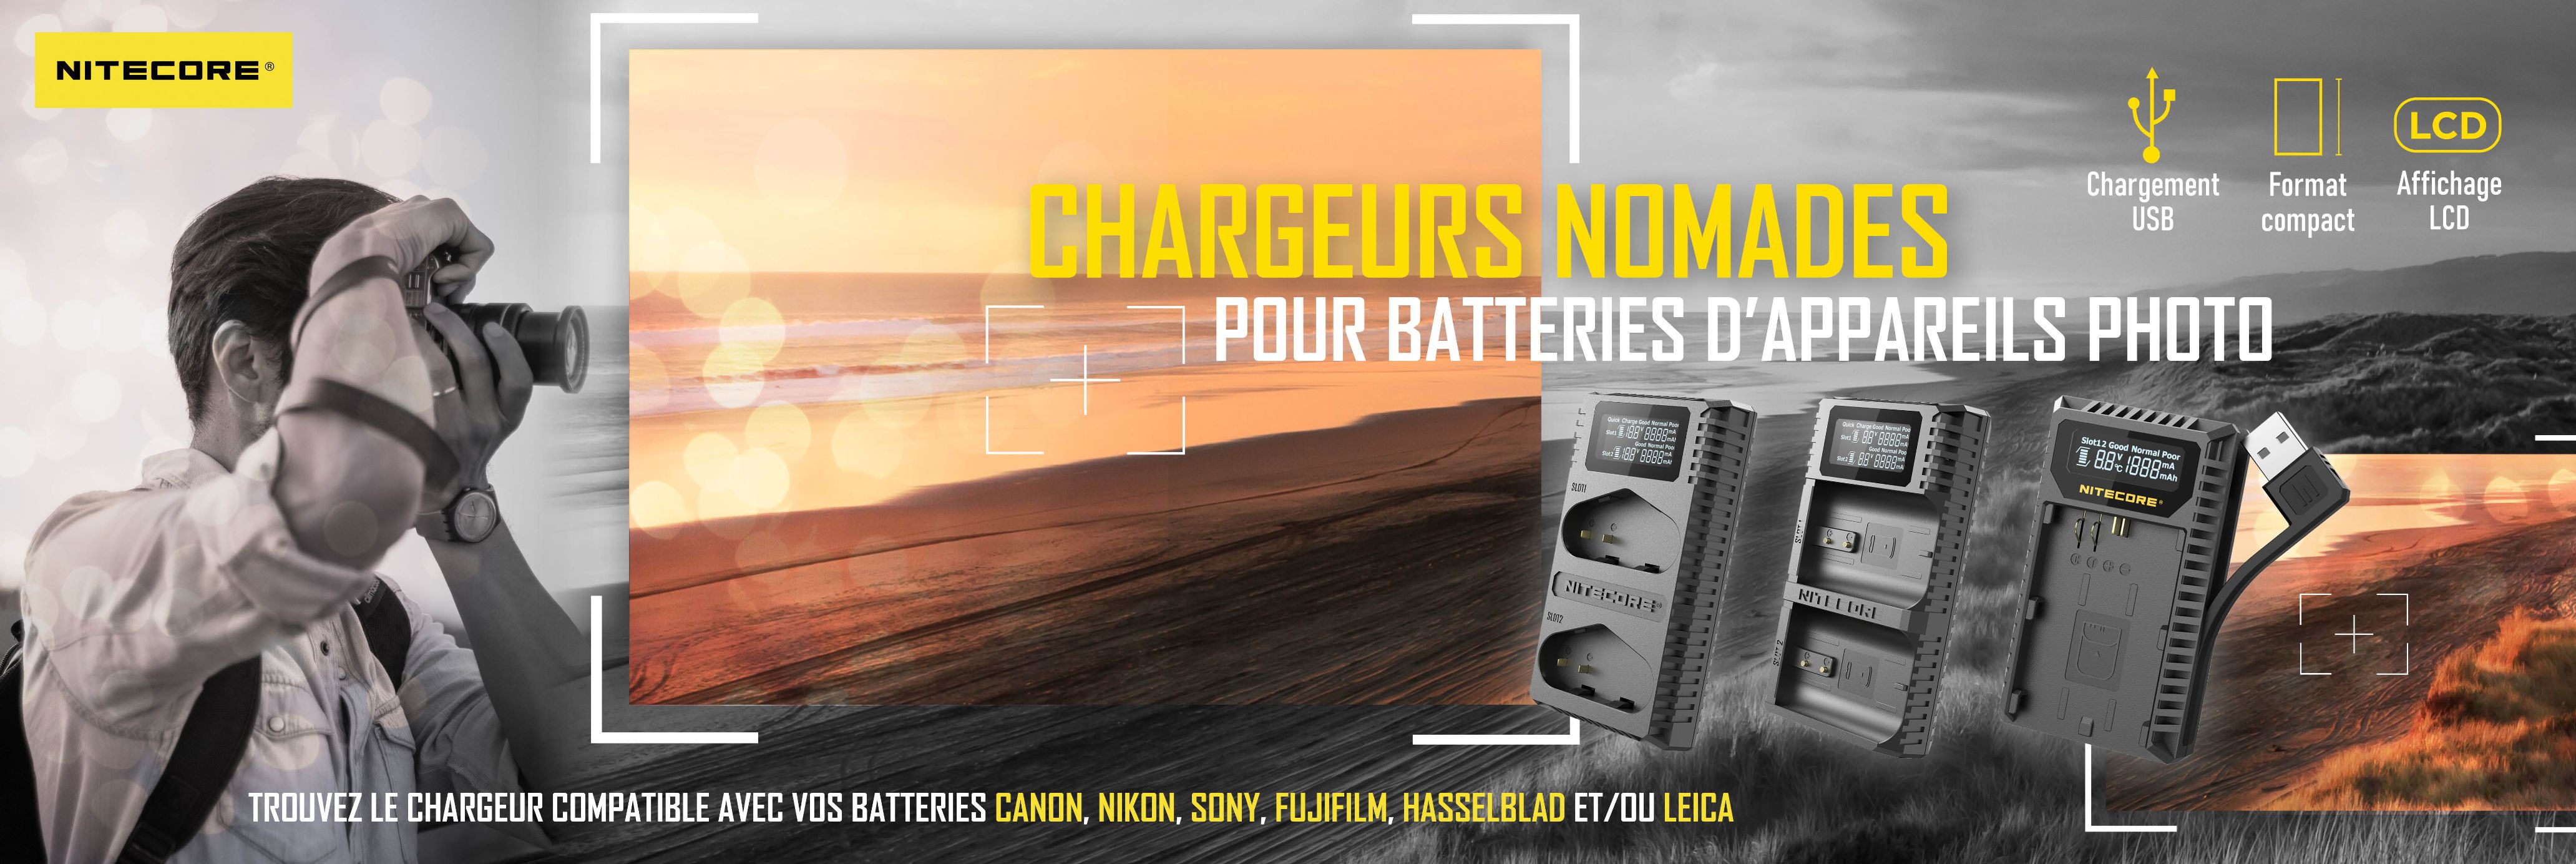 Chargeurs nomades batteries appareils photo